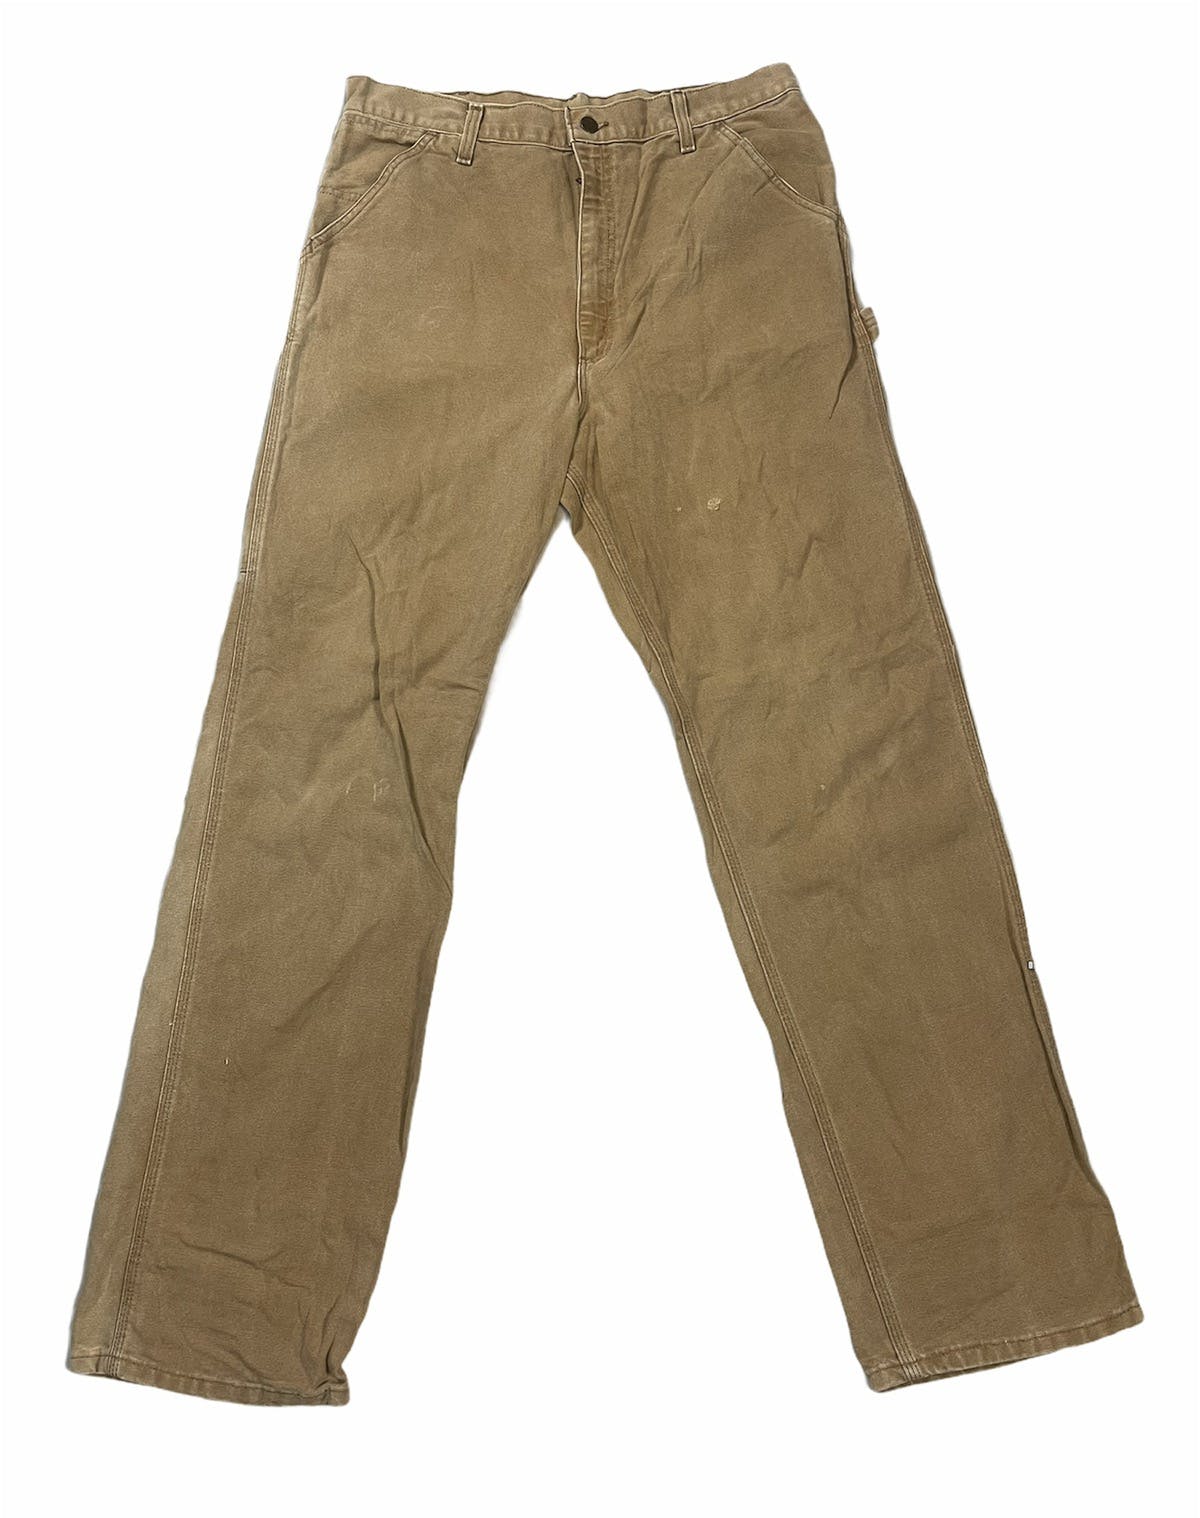 Carhatt Carpenter Cargo Pants - 1